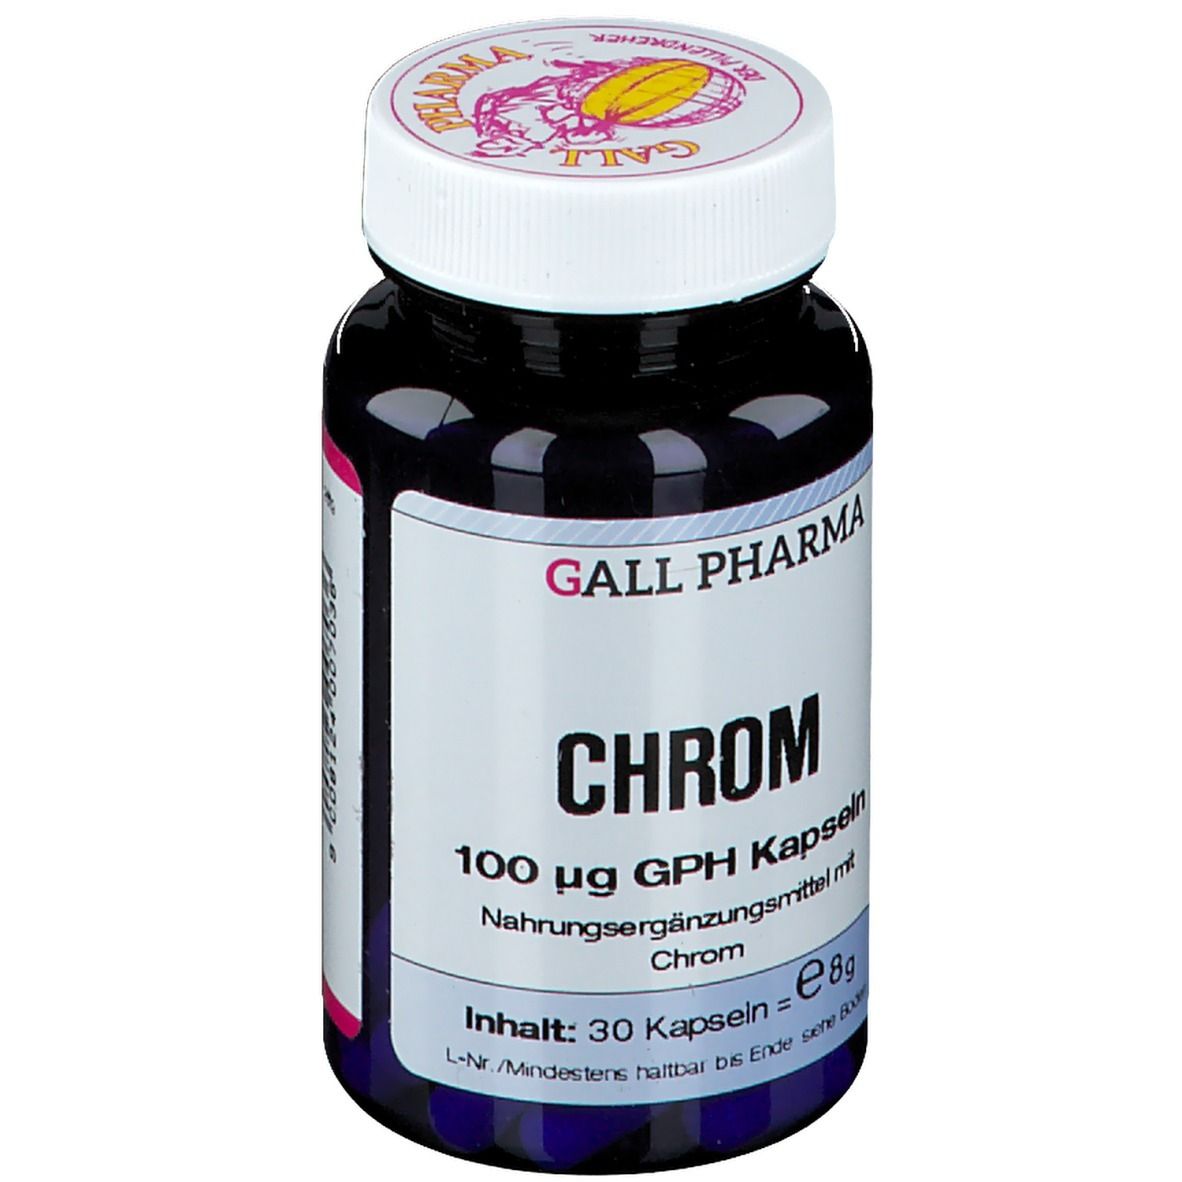 GALL PHARMA Chrom 100 µg GPH Kapseln